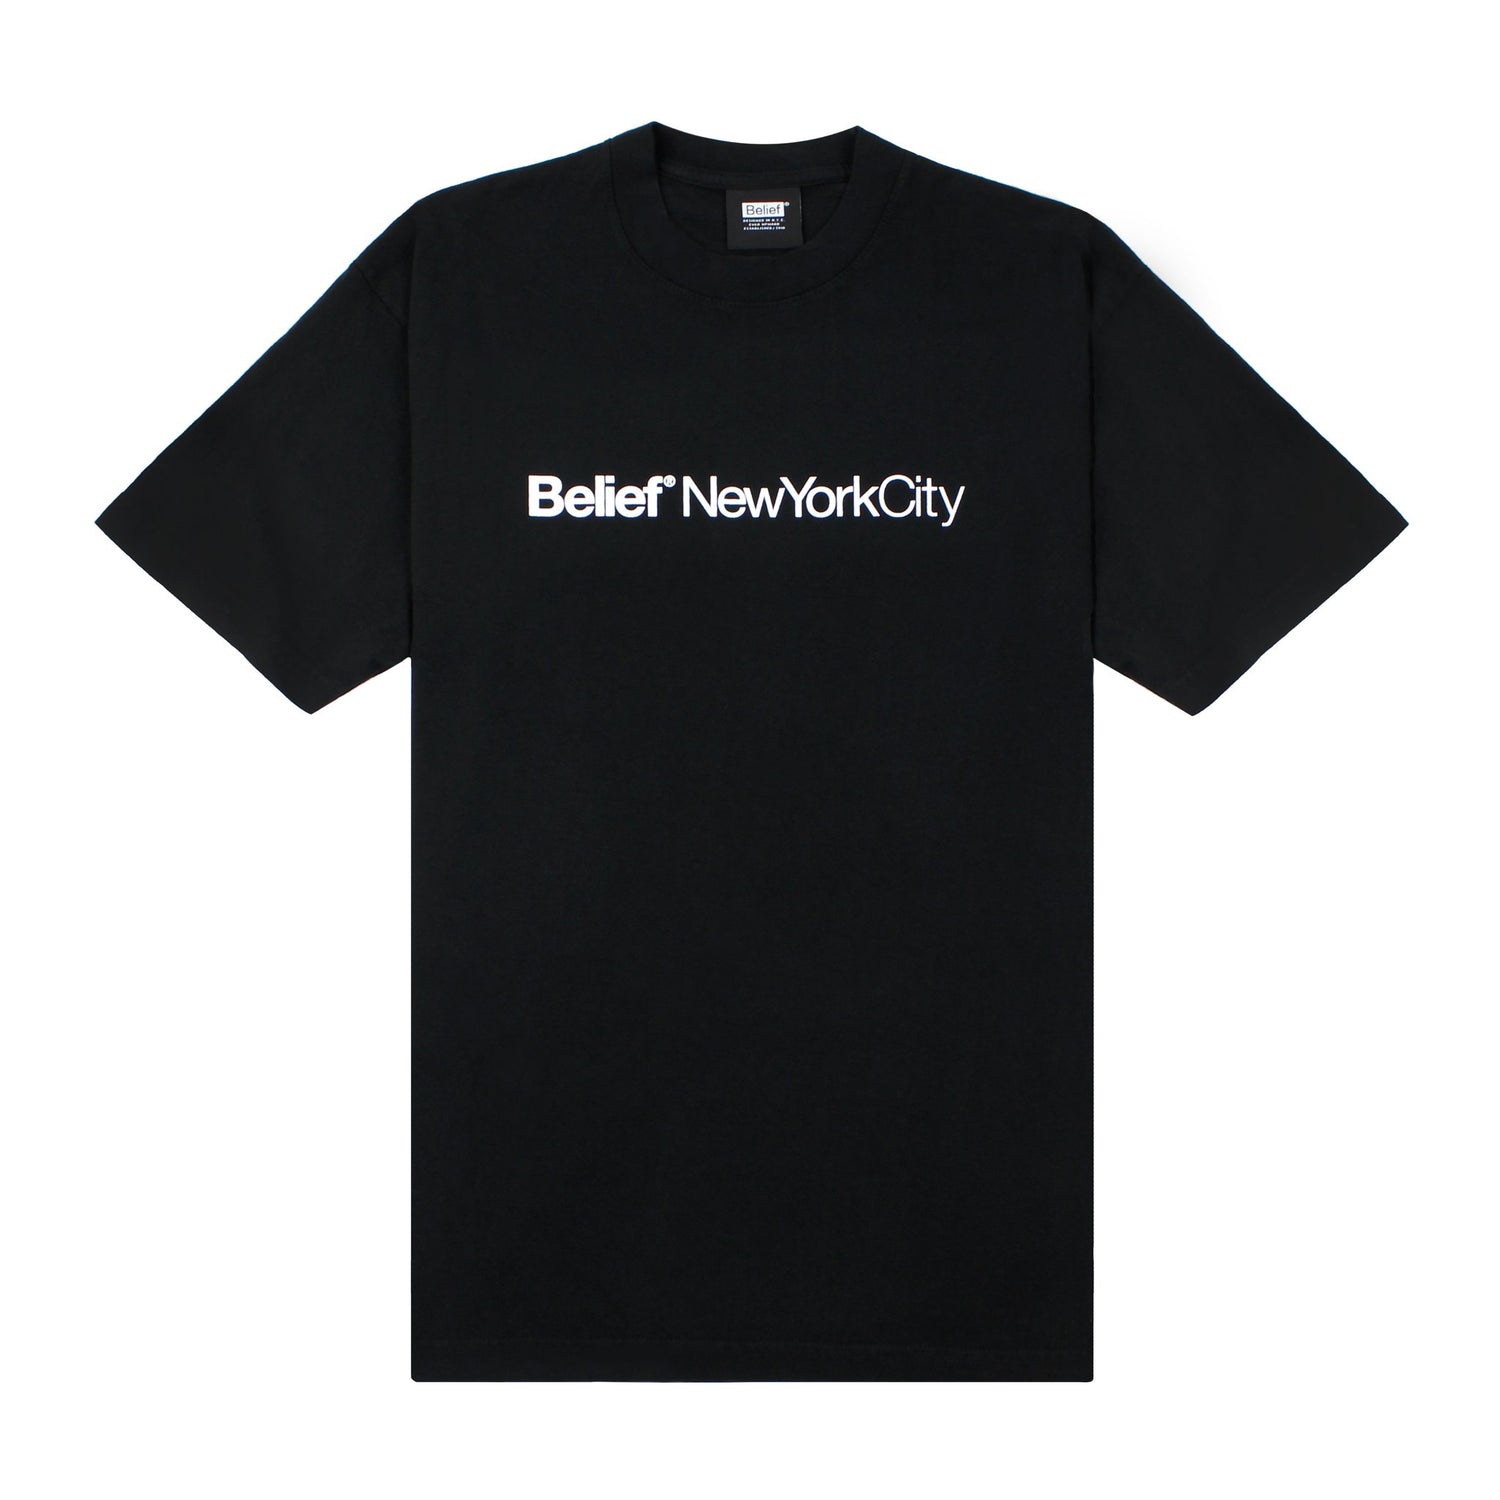 Belief NYC City Tee - Black